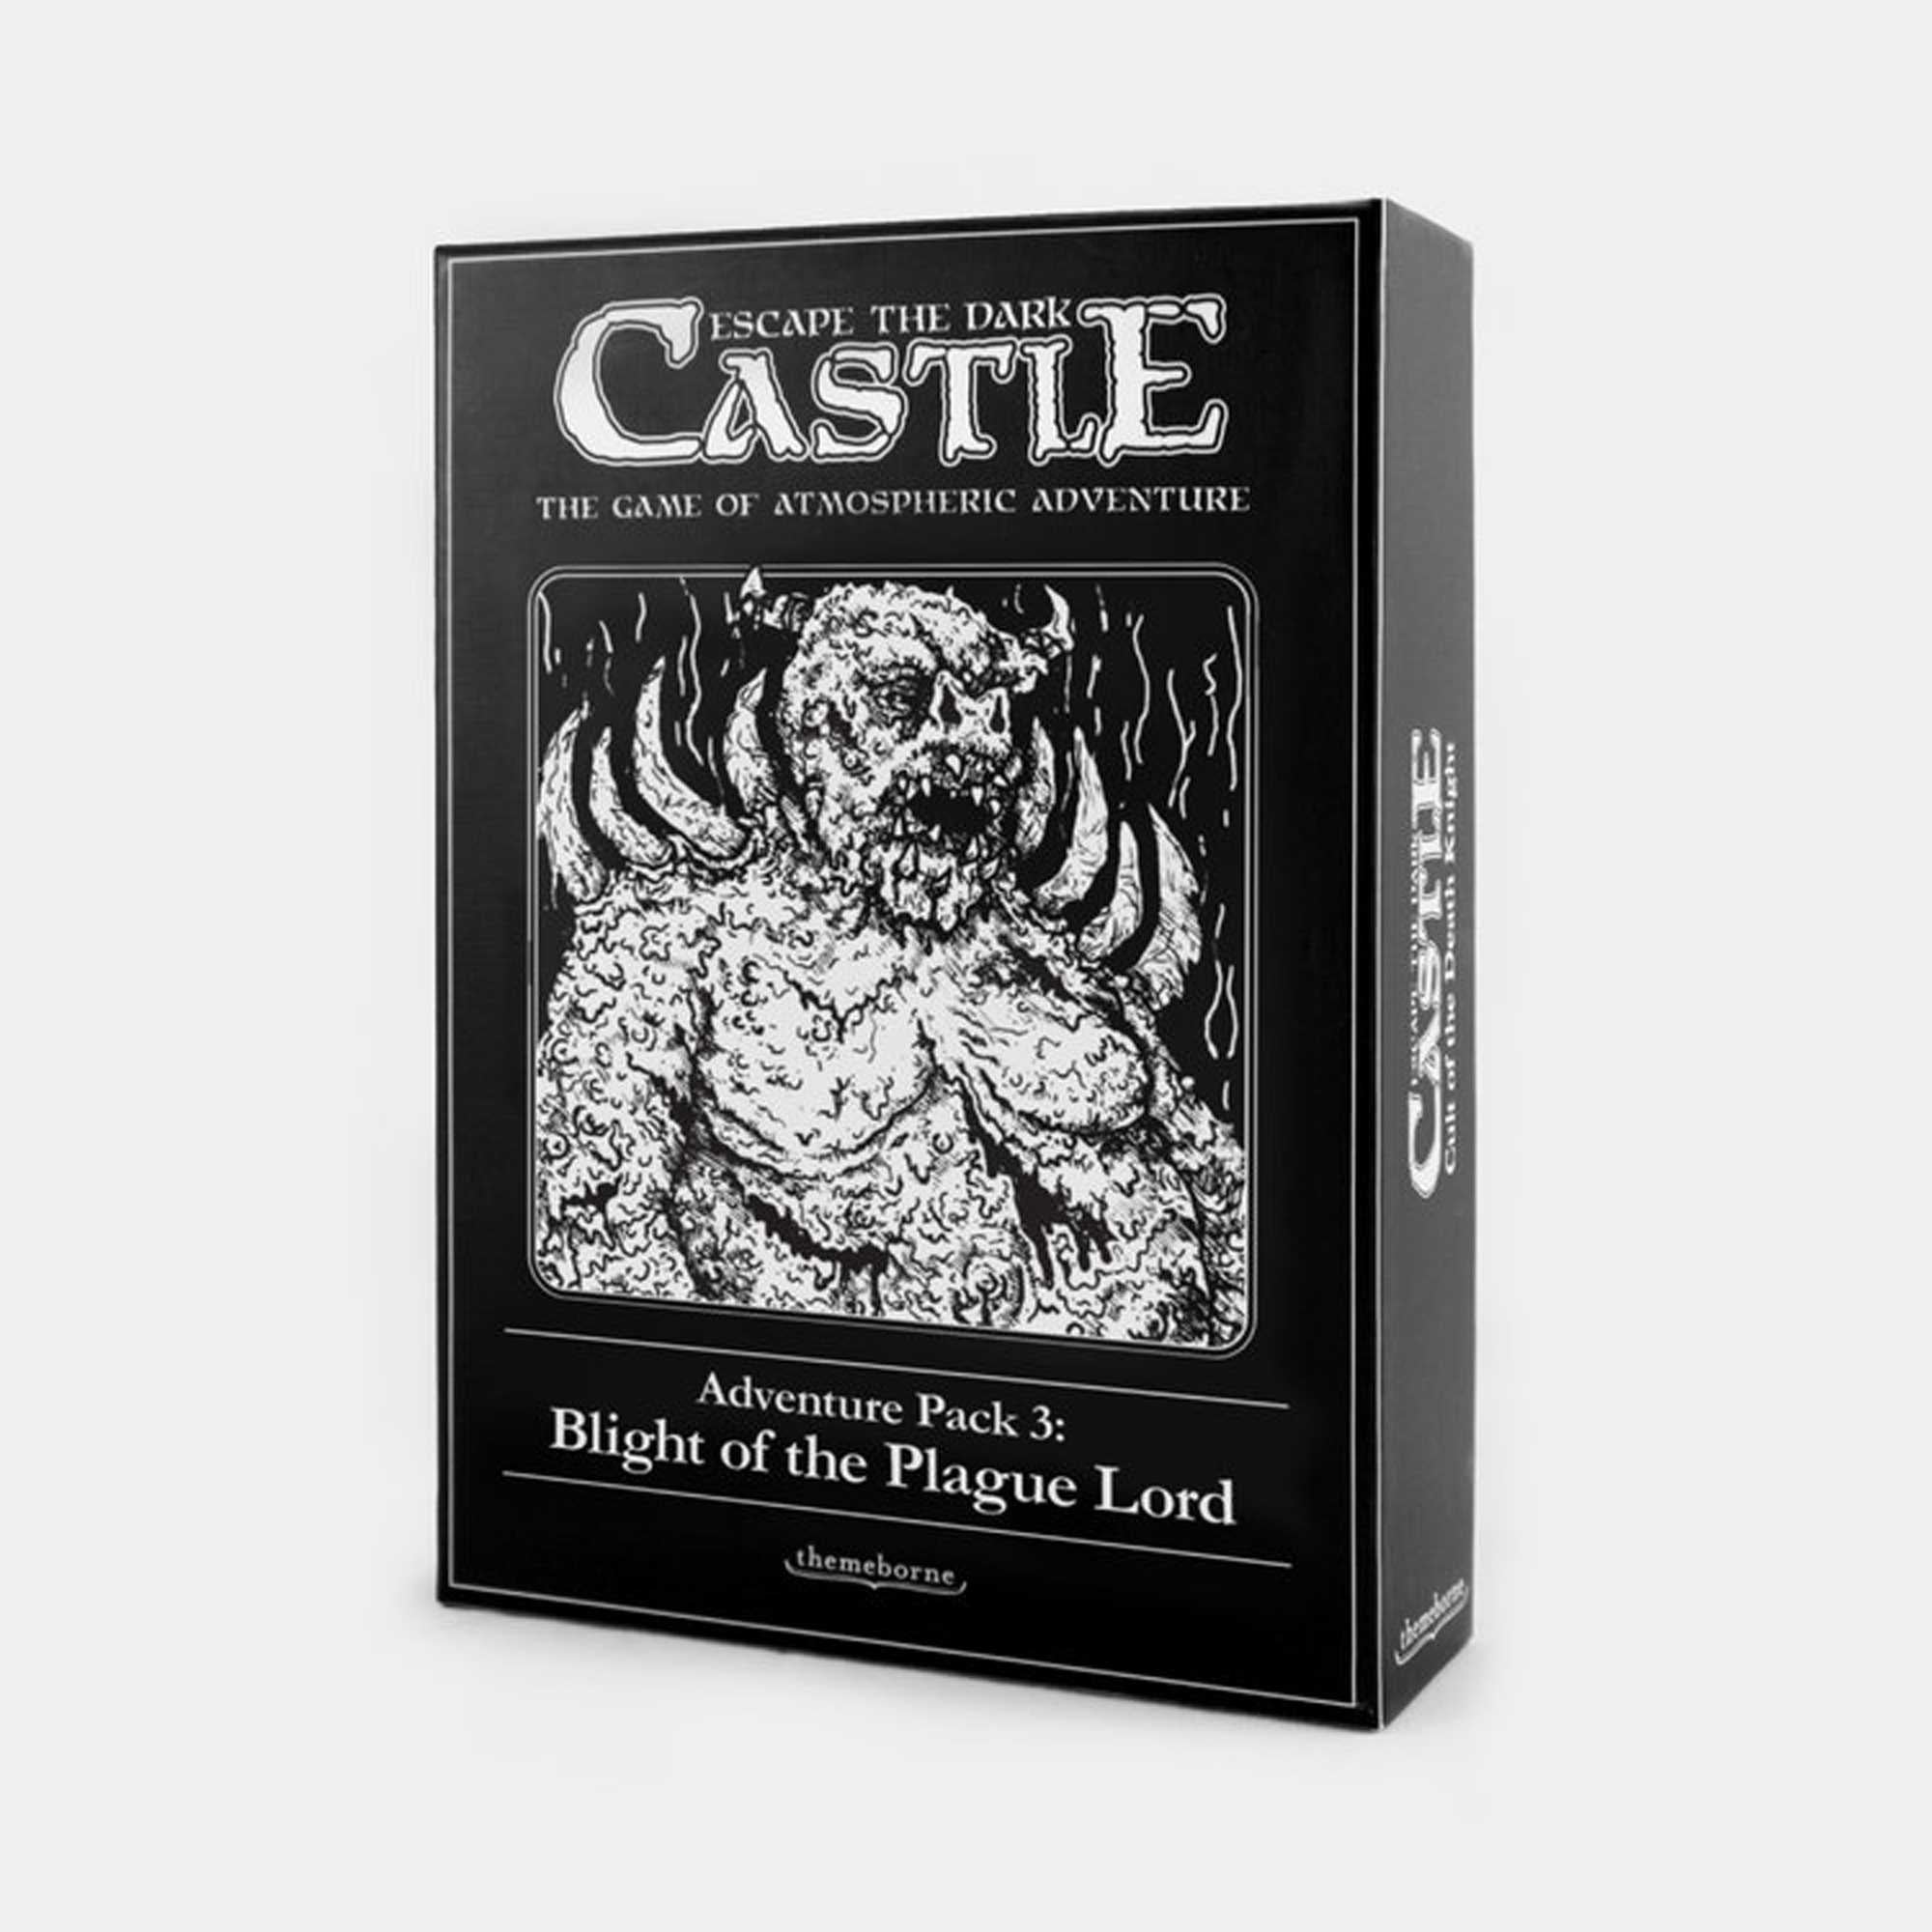 Themeborne Ltd. Escape the Dark Castle: Adventure Pack 3 - Blight of the Plague Lord